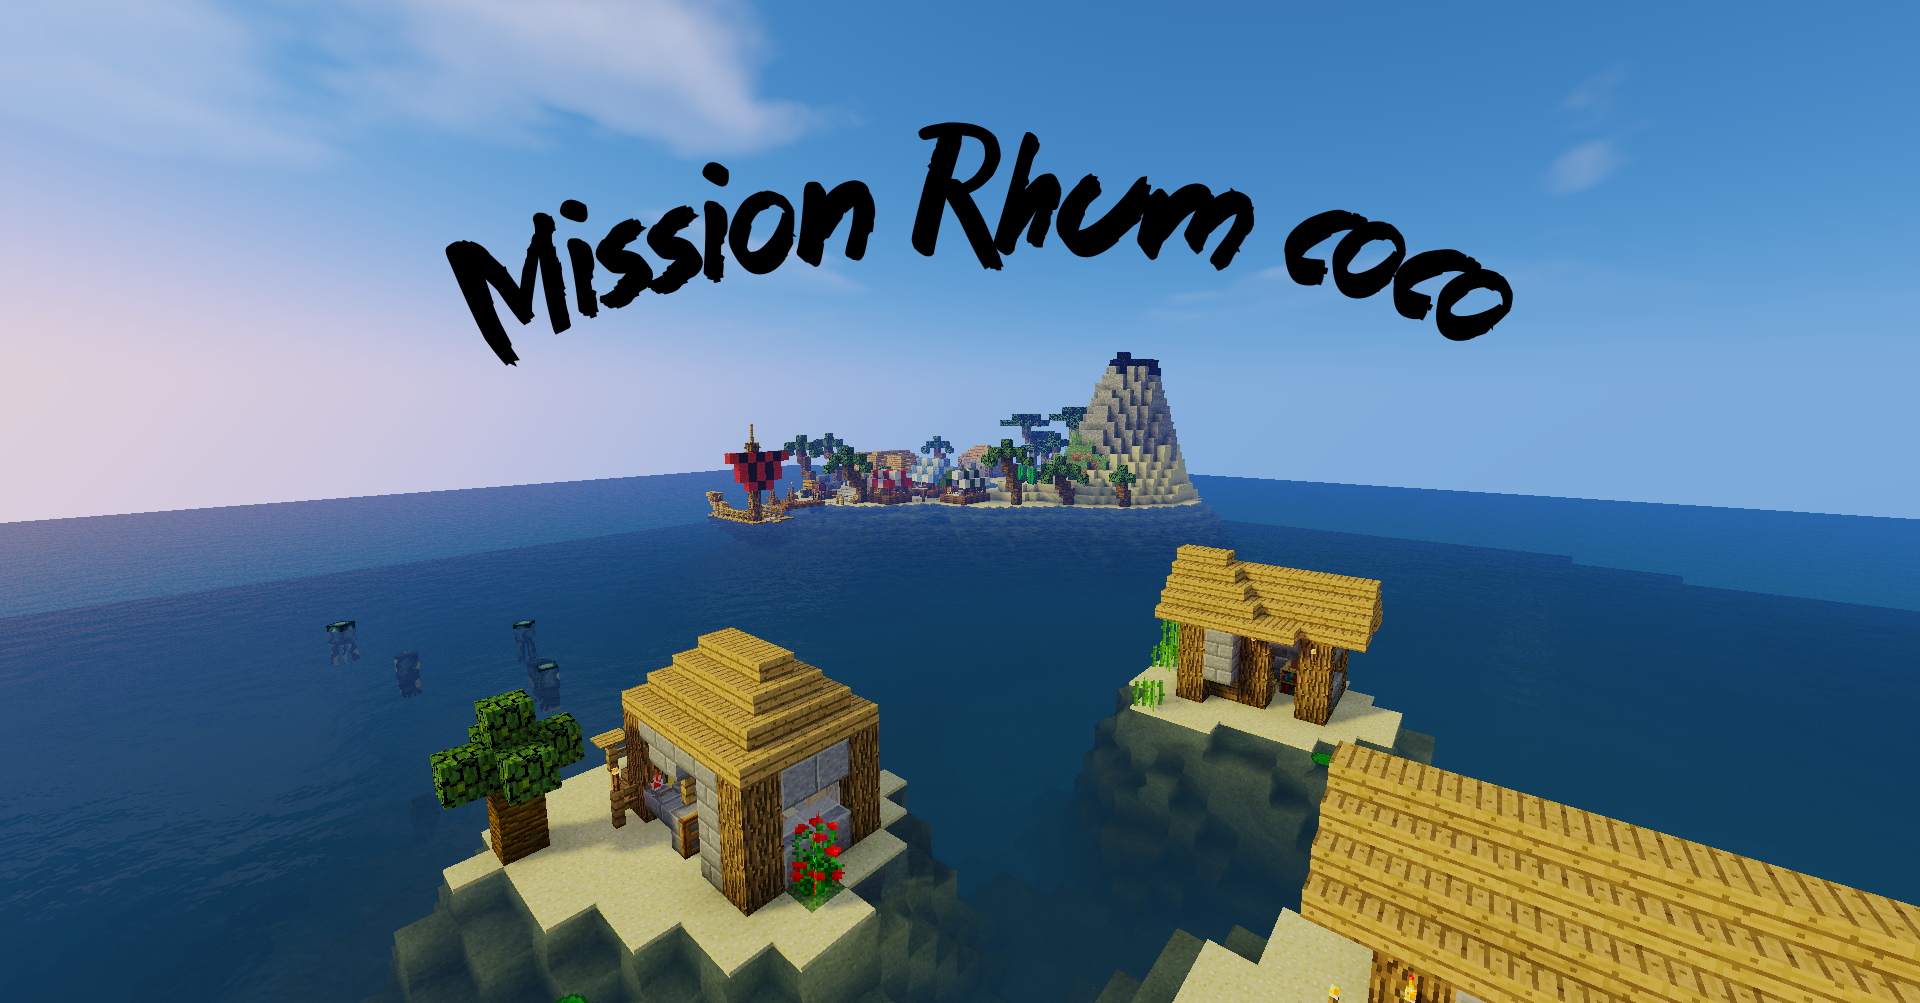 Mission rhum-coco.png